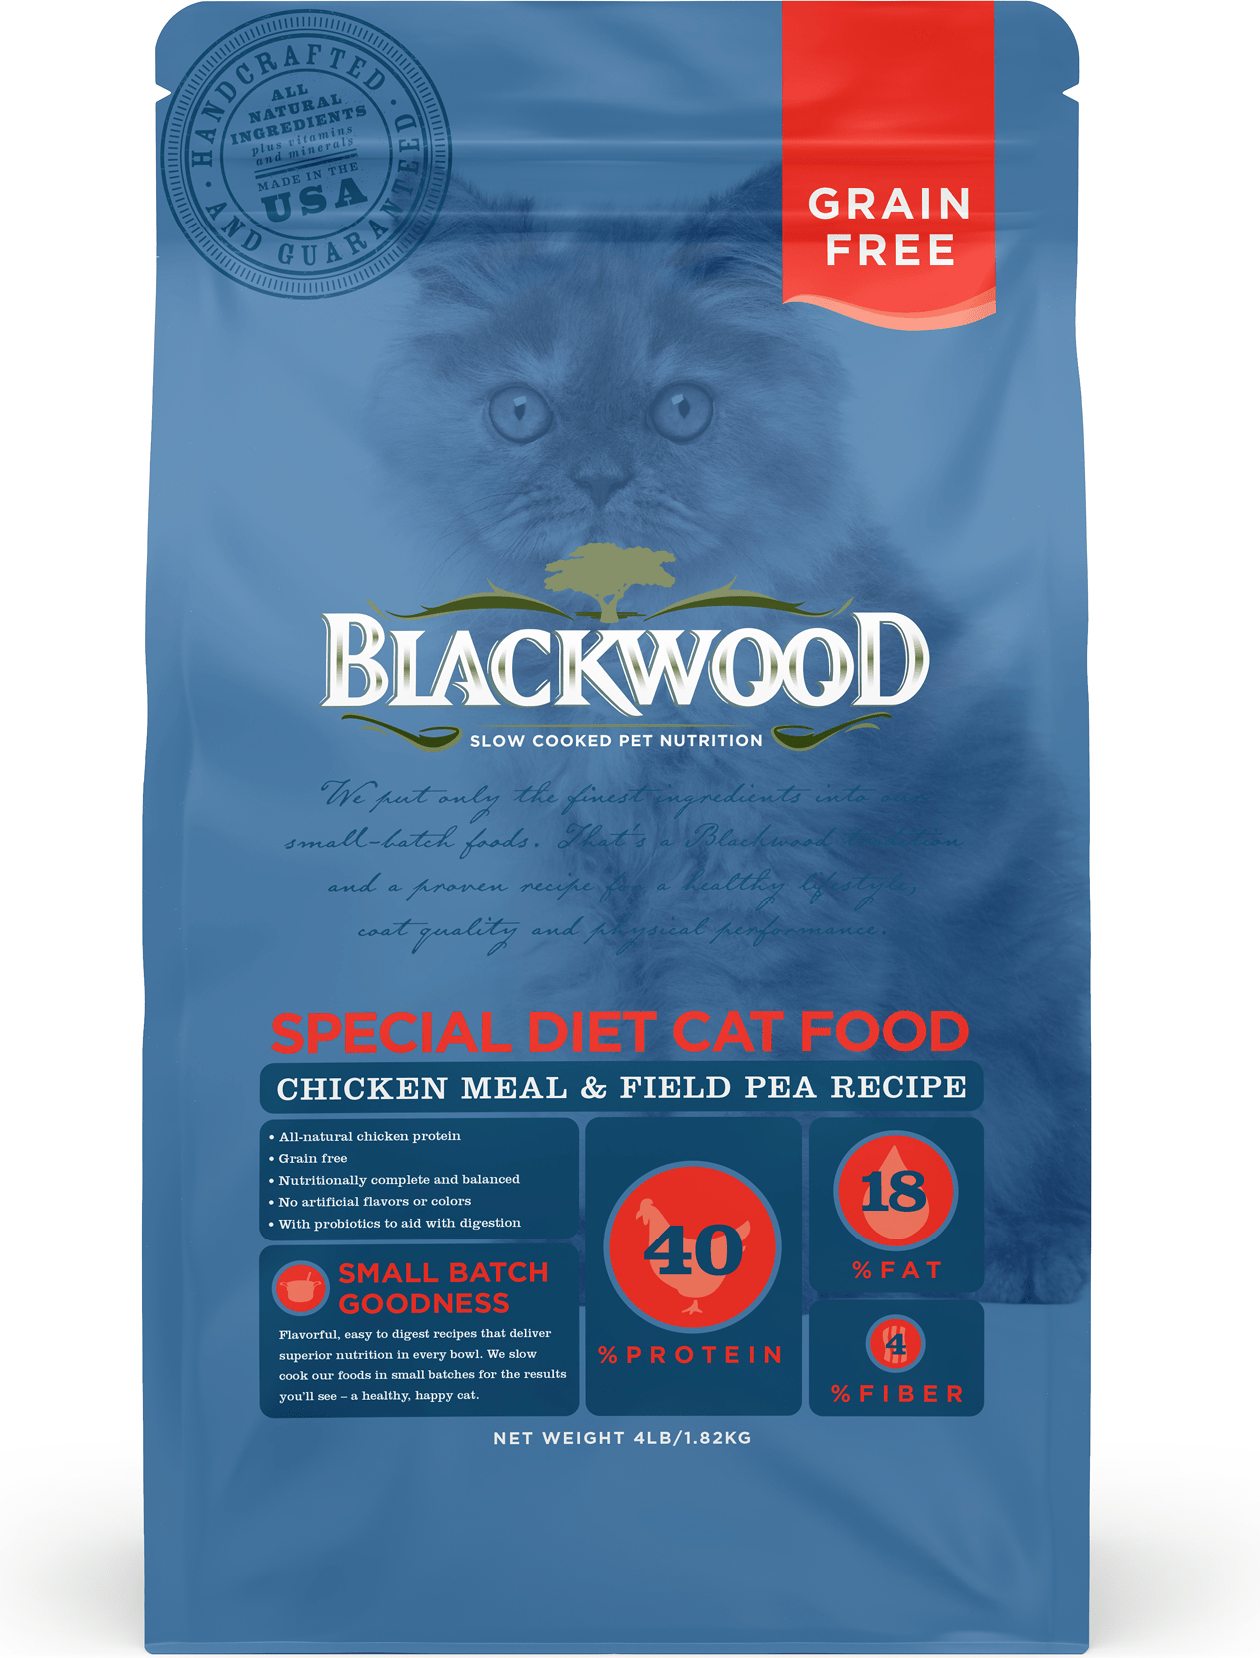 Blackwood Special Diet Chicken Meal & Field Pea Recipe